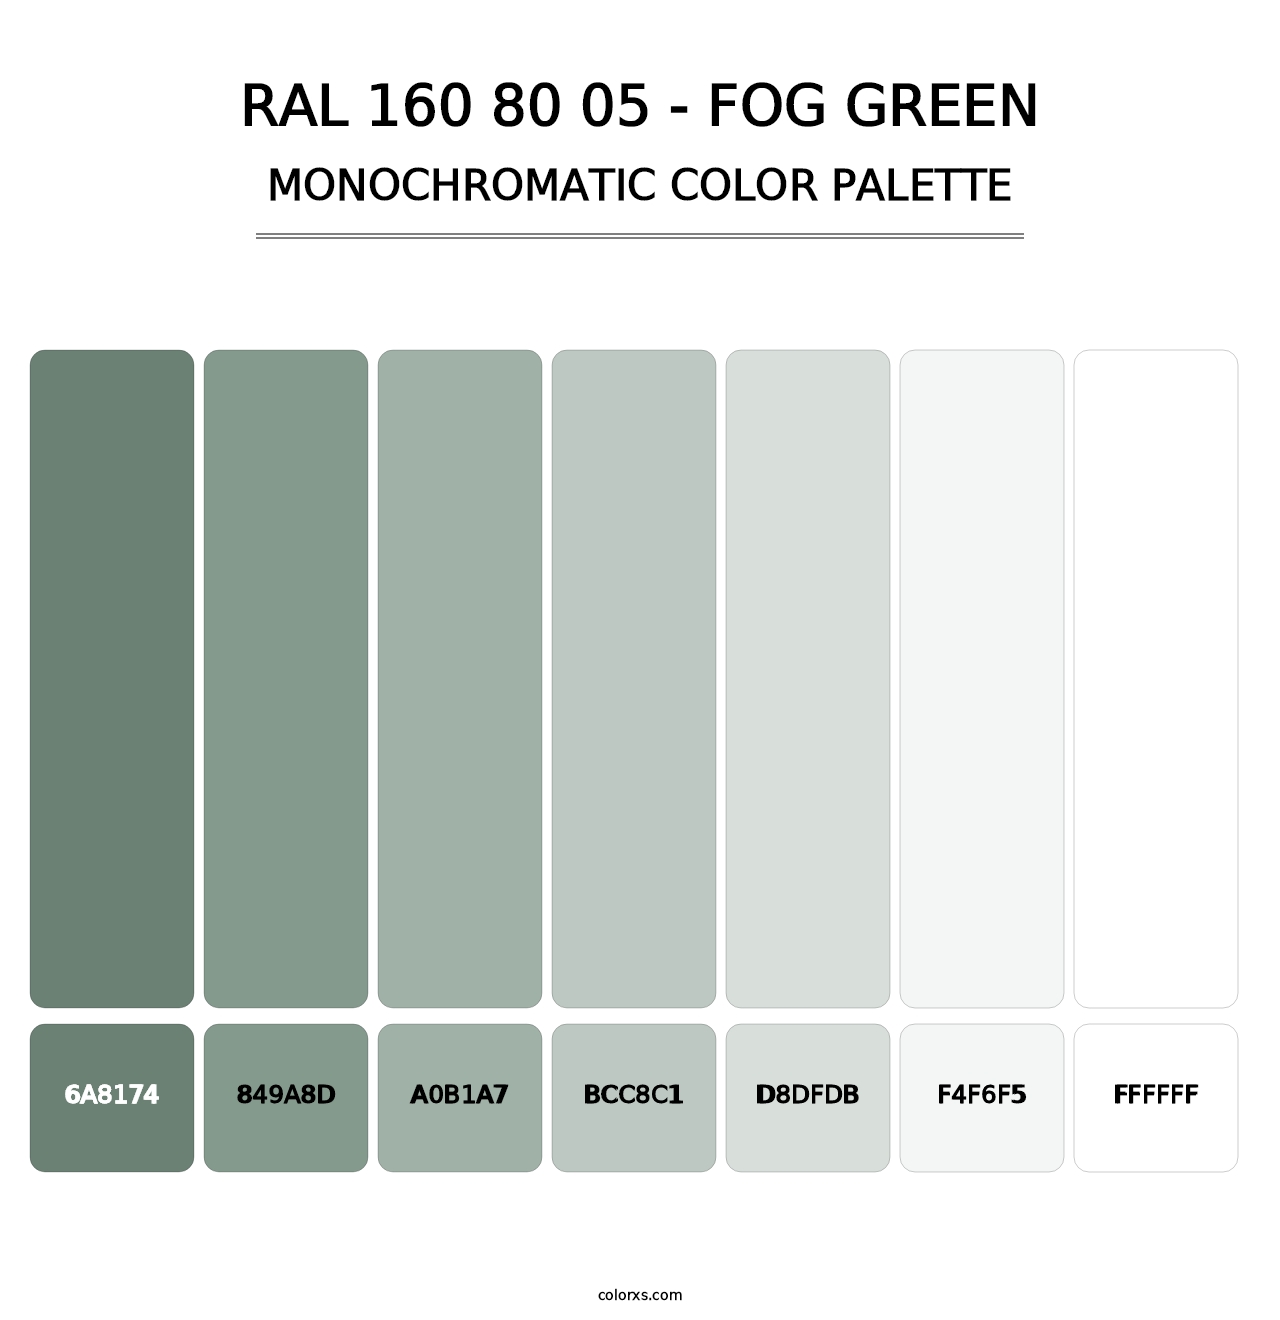 RAL 160 80 05 - Fog Green - Monochromatic Color Palette